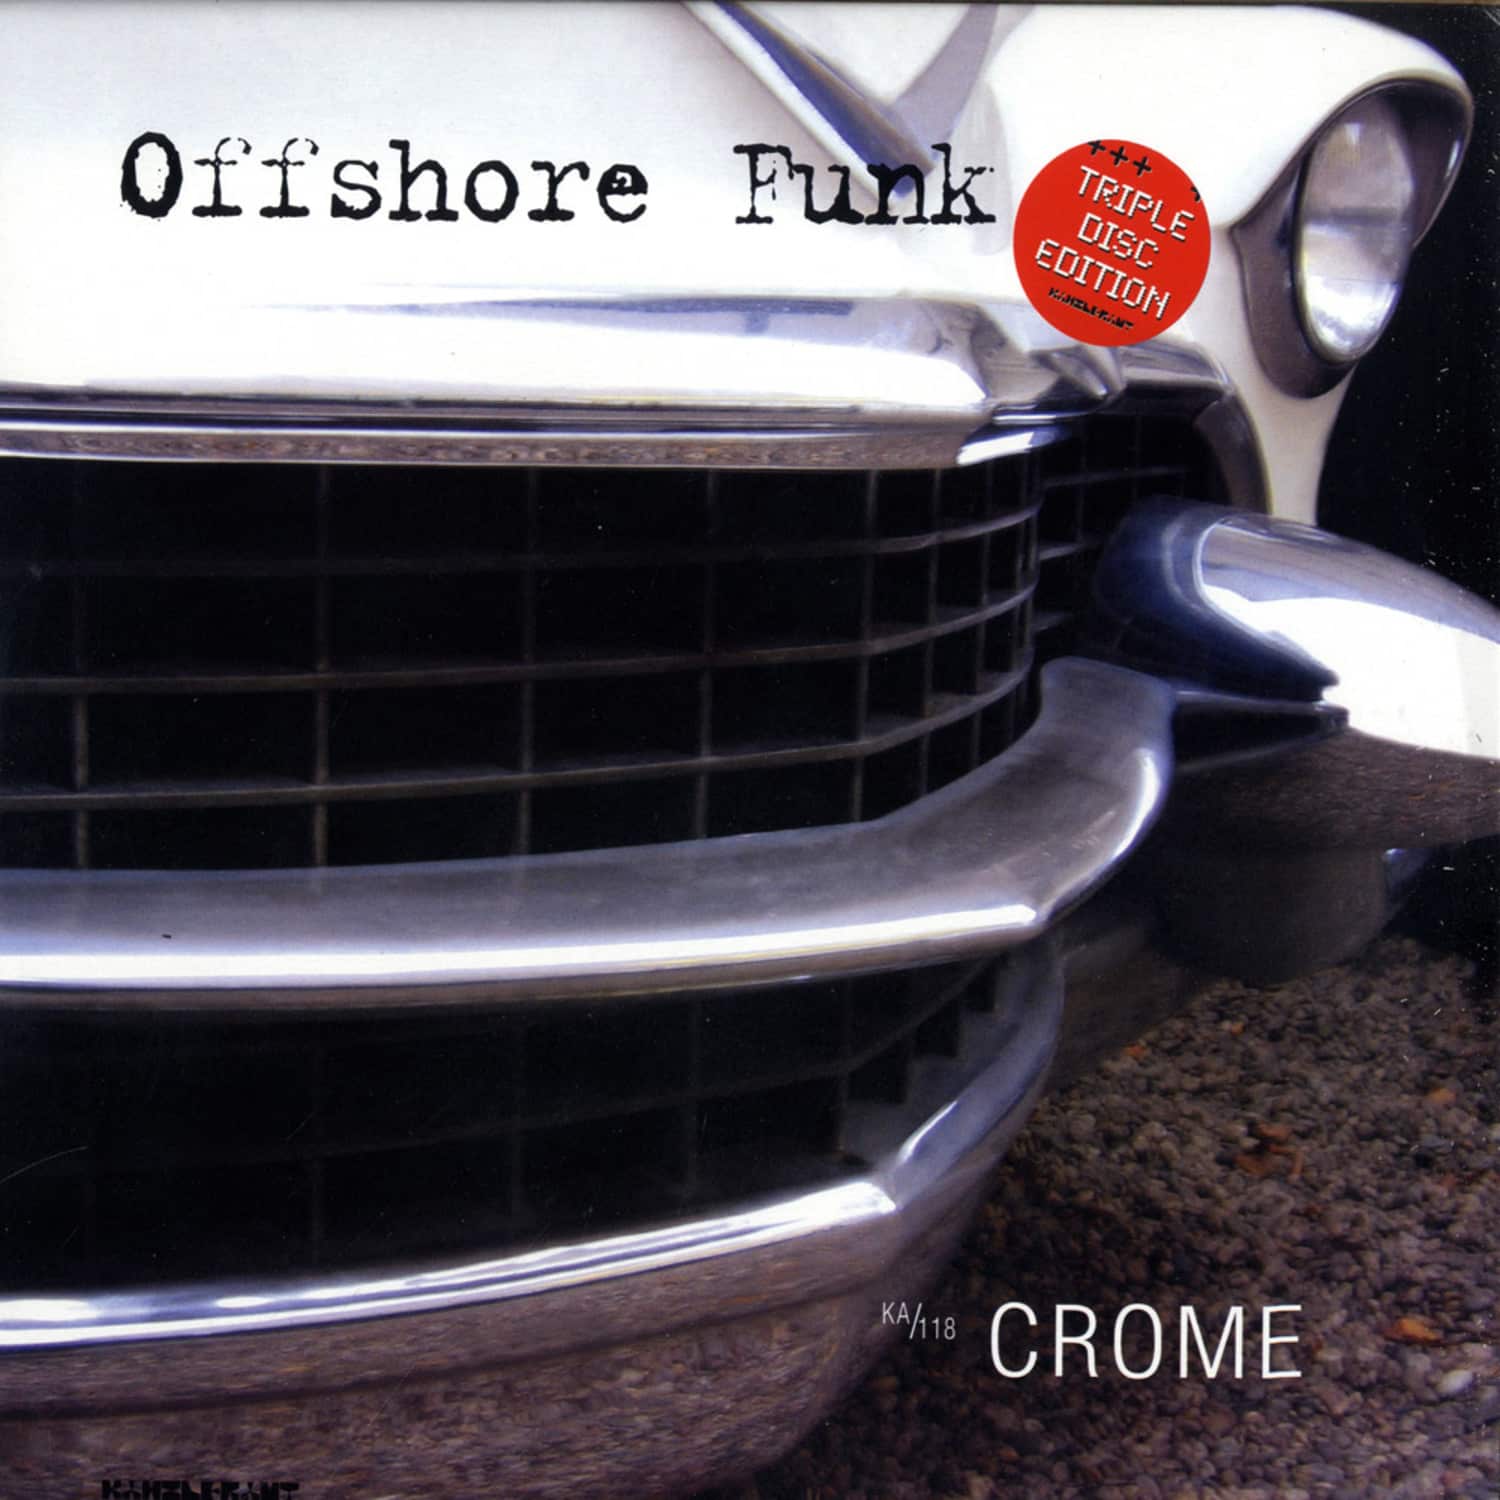 Offshore Funk - CROME 